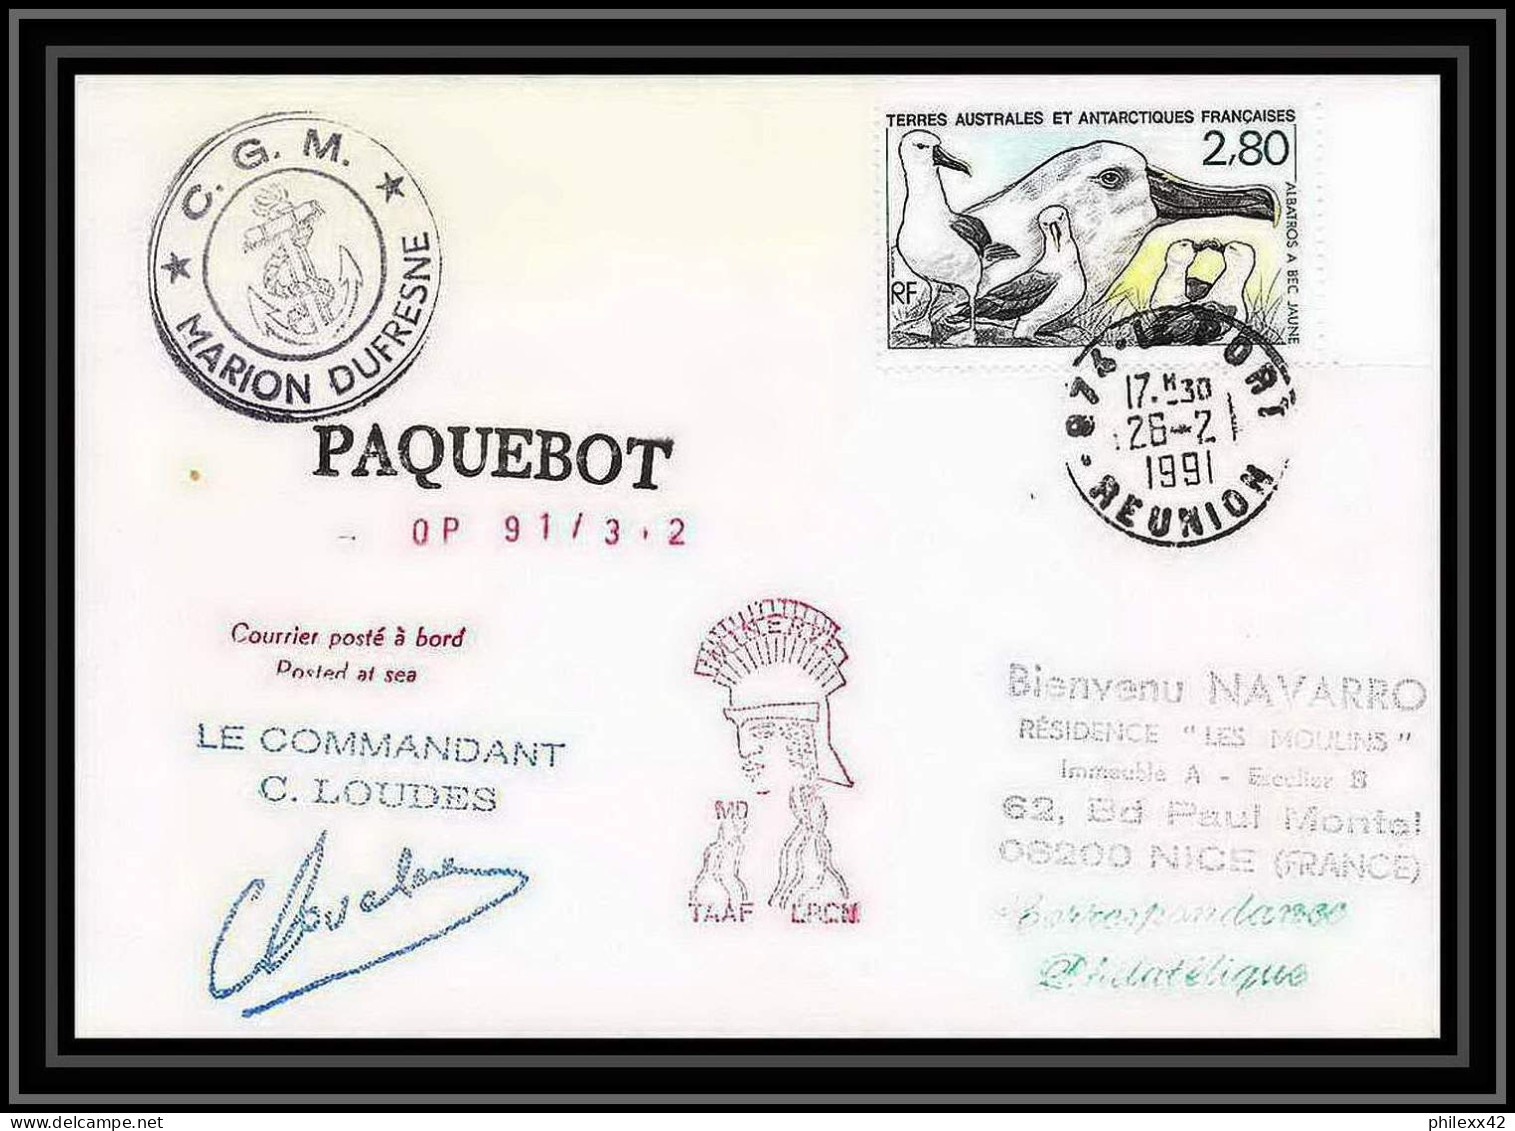 1769 Op 91-3-2 Signé Signed Loudes 26/2/1991 La Reunion Marion Dufresne TAAF Antarctic Terres Australes Lettre (cover) - Lettres & Documents